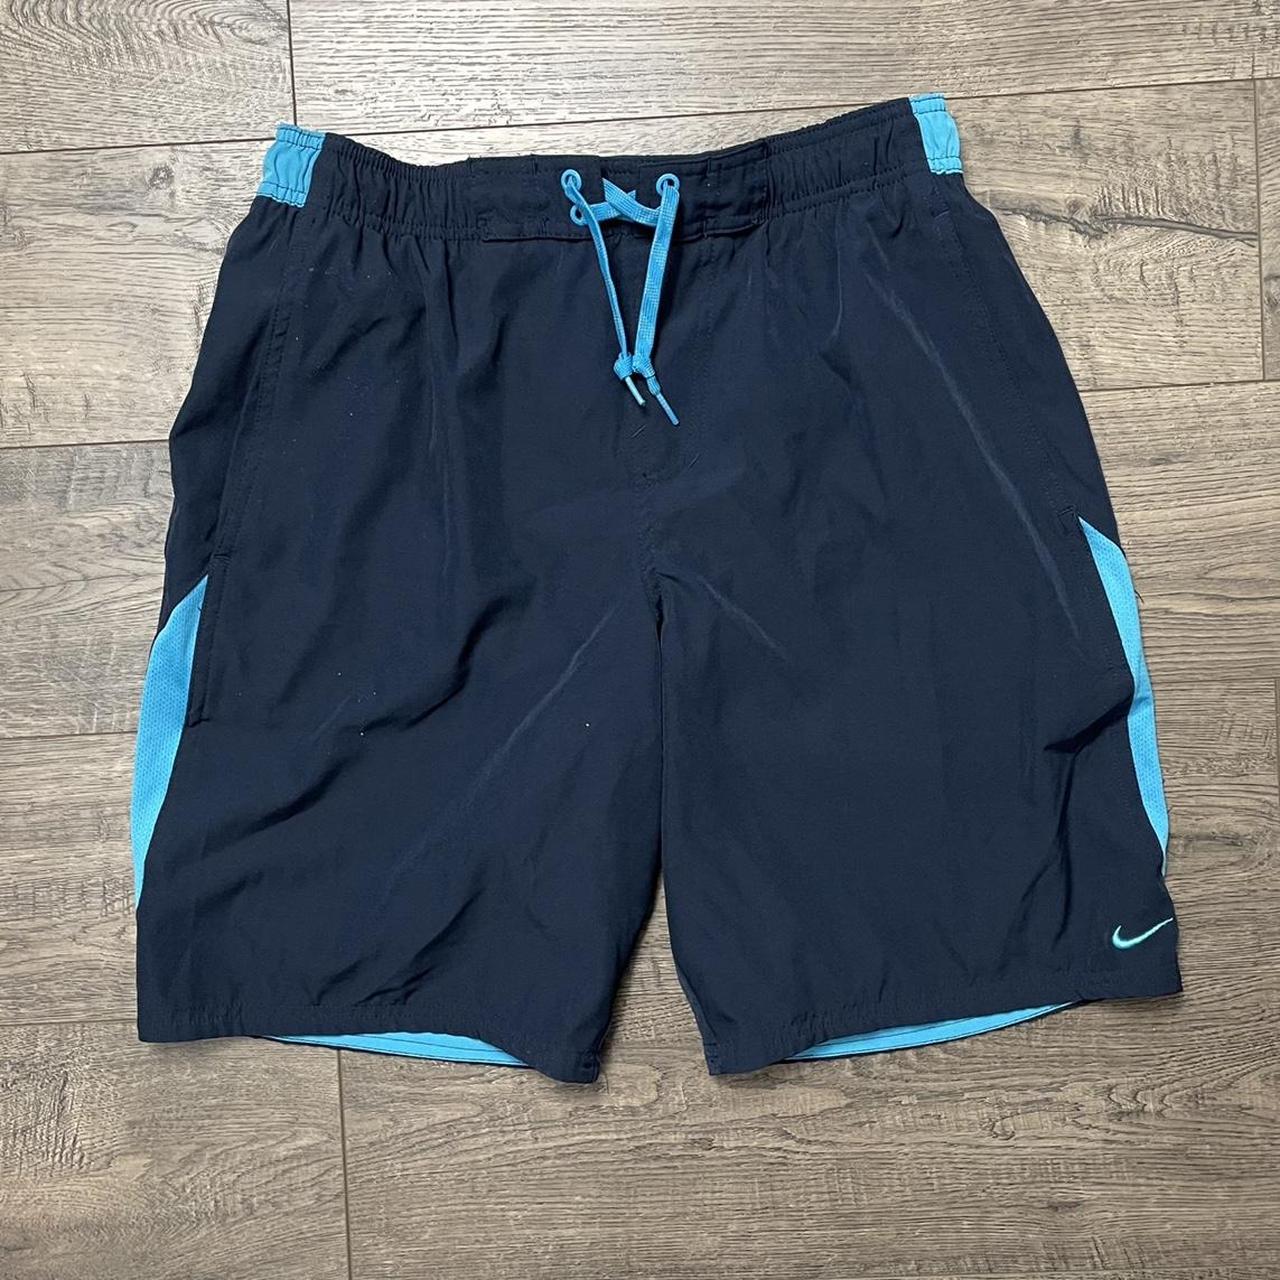 Navy blue Nike swim shorts size medium Good... - Depop